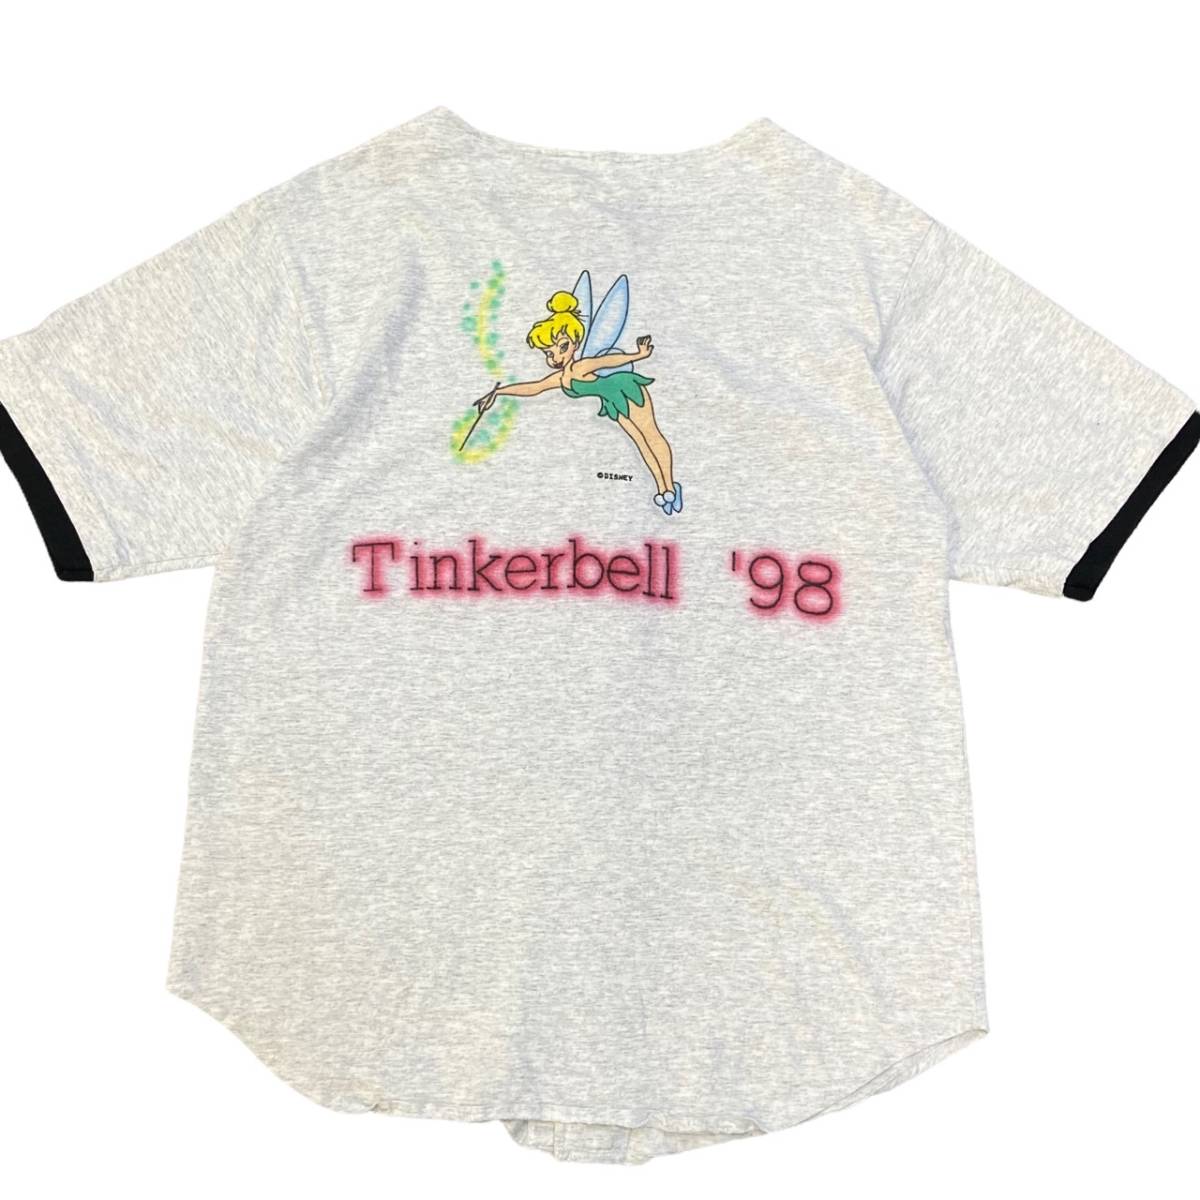 90s USA製 Disney Tinkerbell ティンカーベル '98 ベースボールシャツ Tシャツ M ディズニー キャラクター プリンセス ヴィンテージ